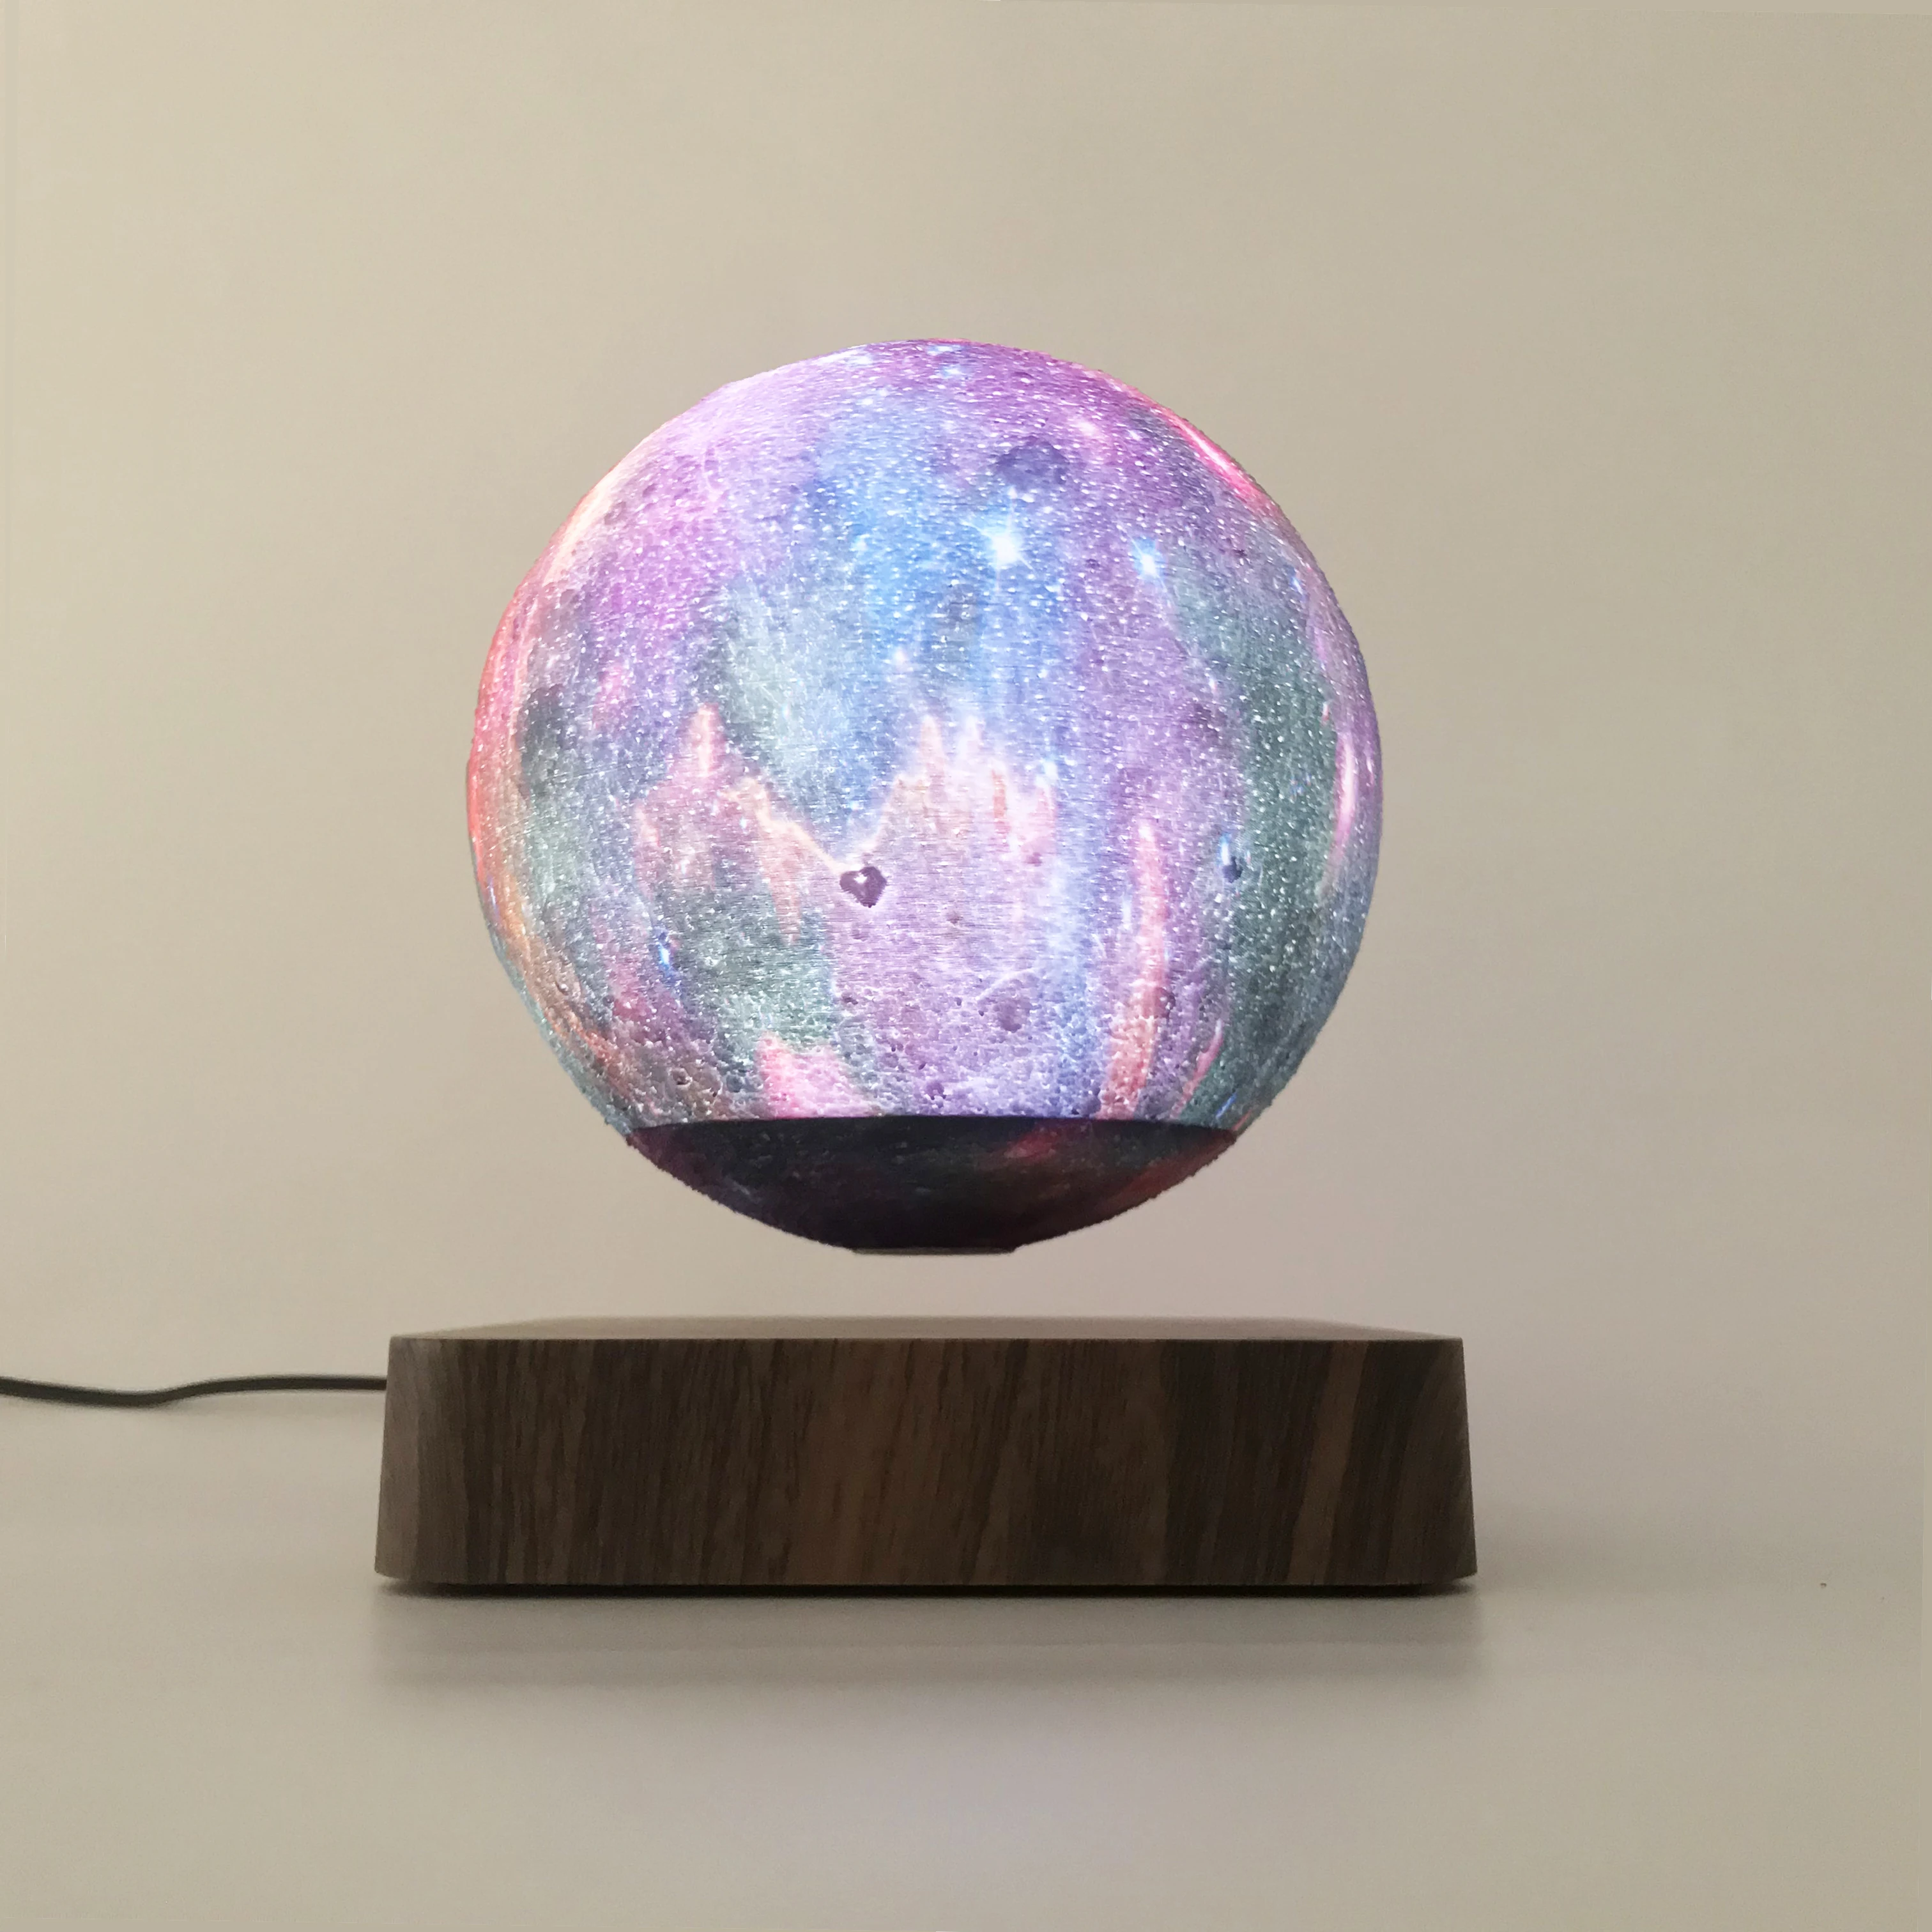 LEVINA  Floating Moon Lamp – Levina